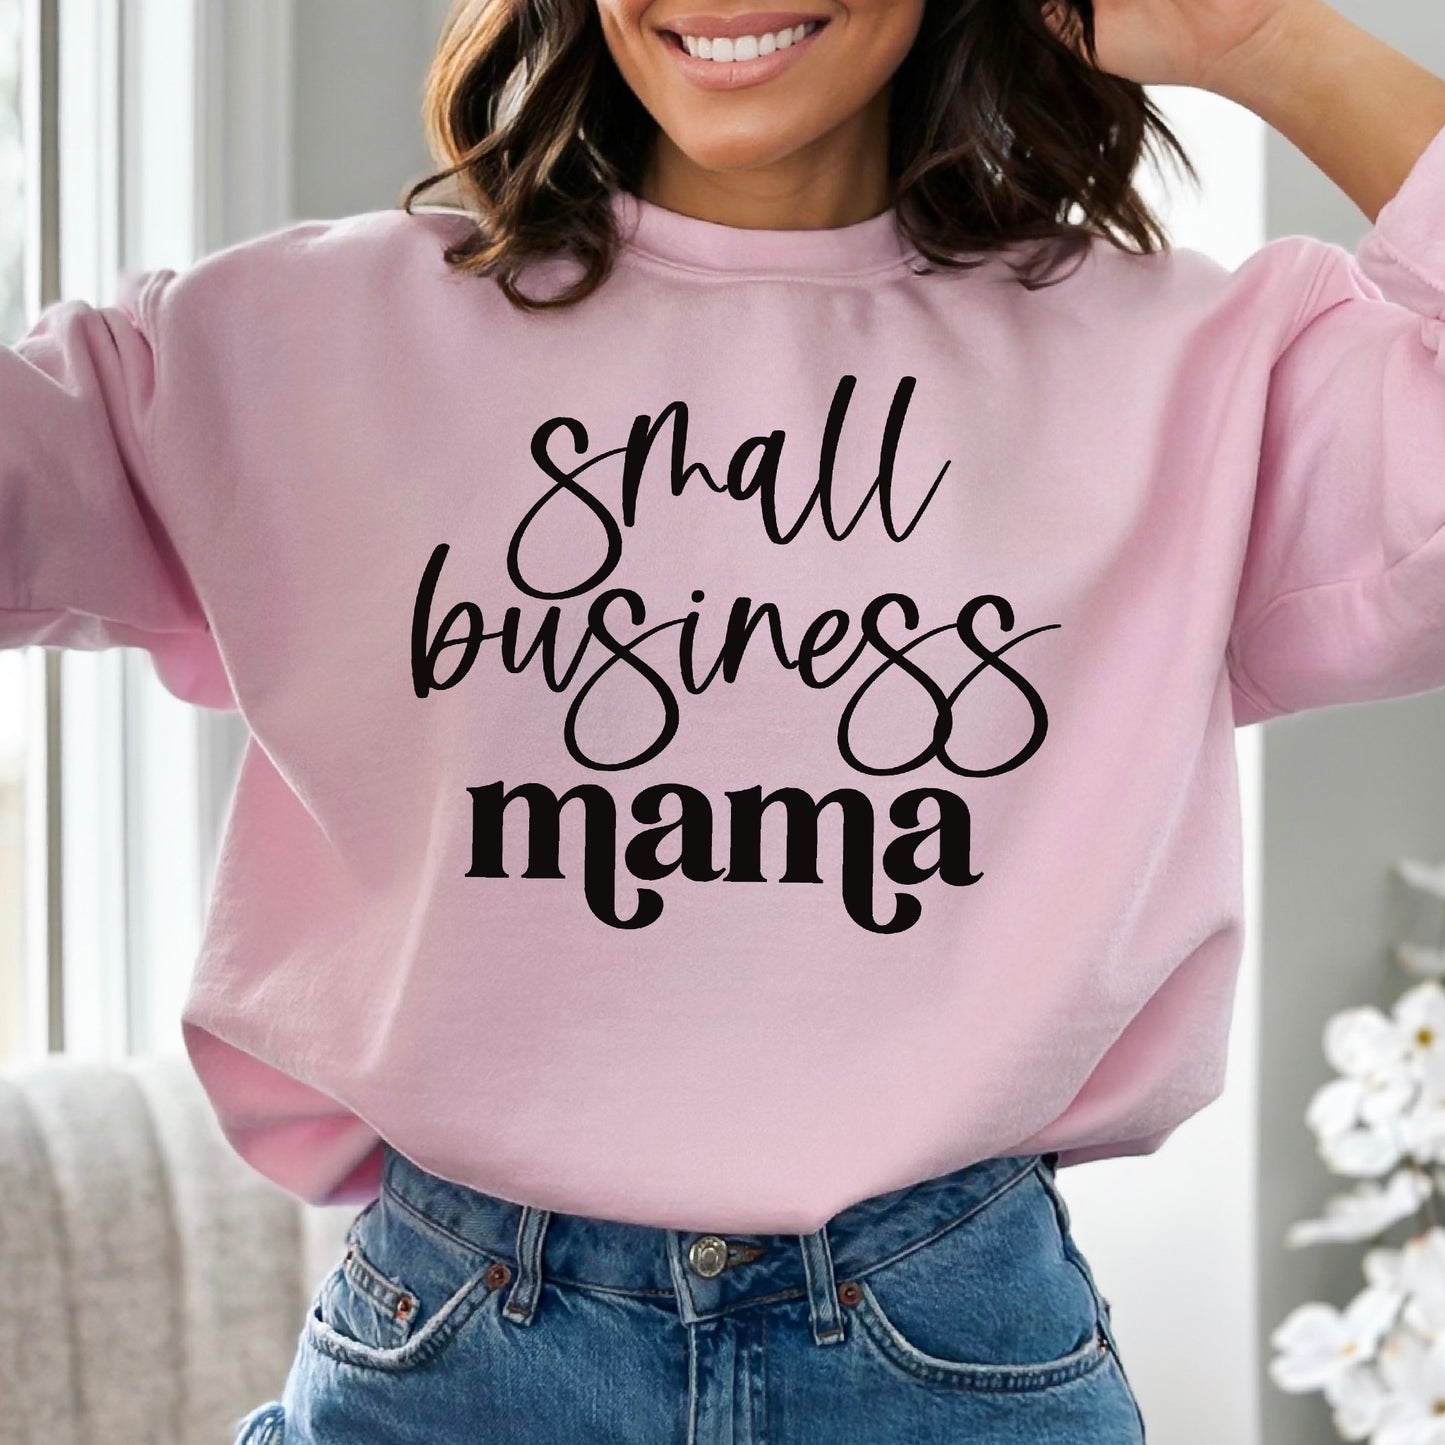 Small Business Mama Unisex Sweatshirt